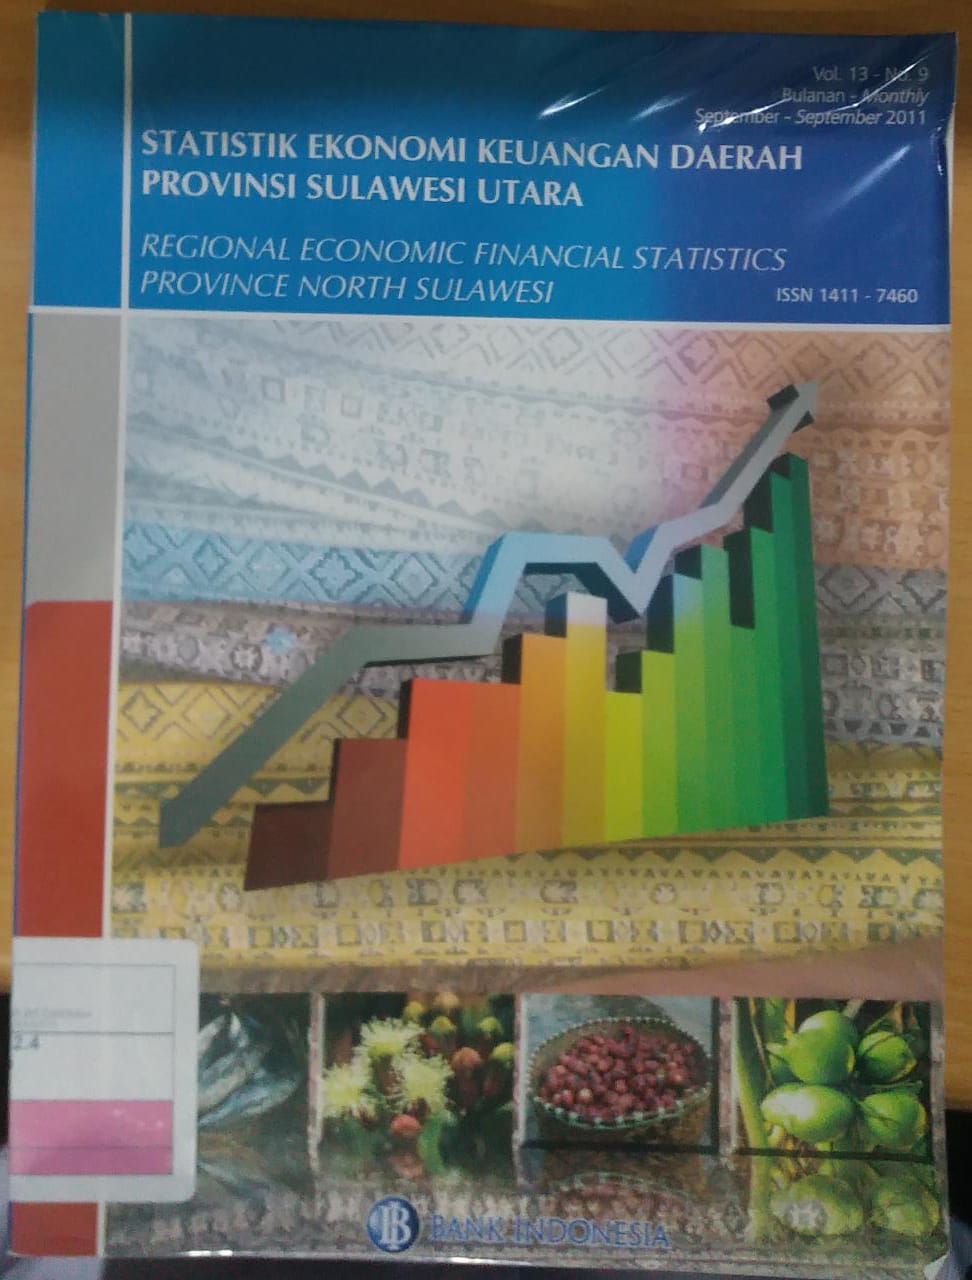 Statistik Ekonomi Keuangan Daerah Provinsi Sulawesi Utara Vol 13 No, 09 = :  Regional Economic Financial Statistics Province North Sulawesi